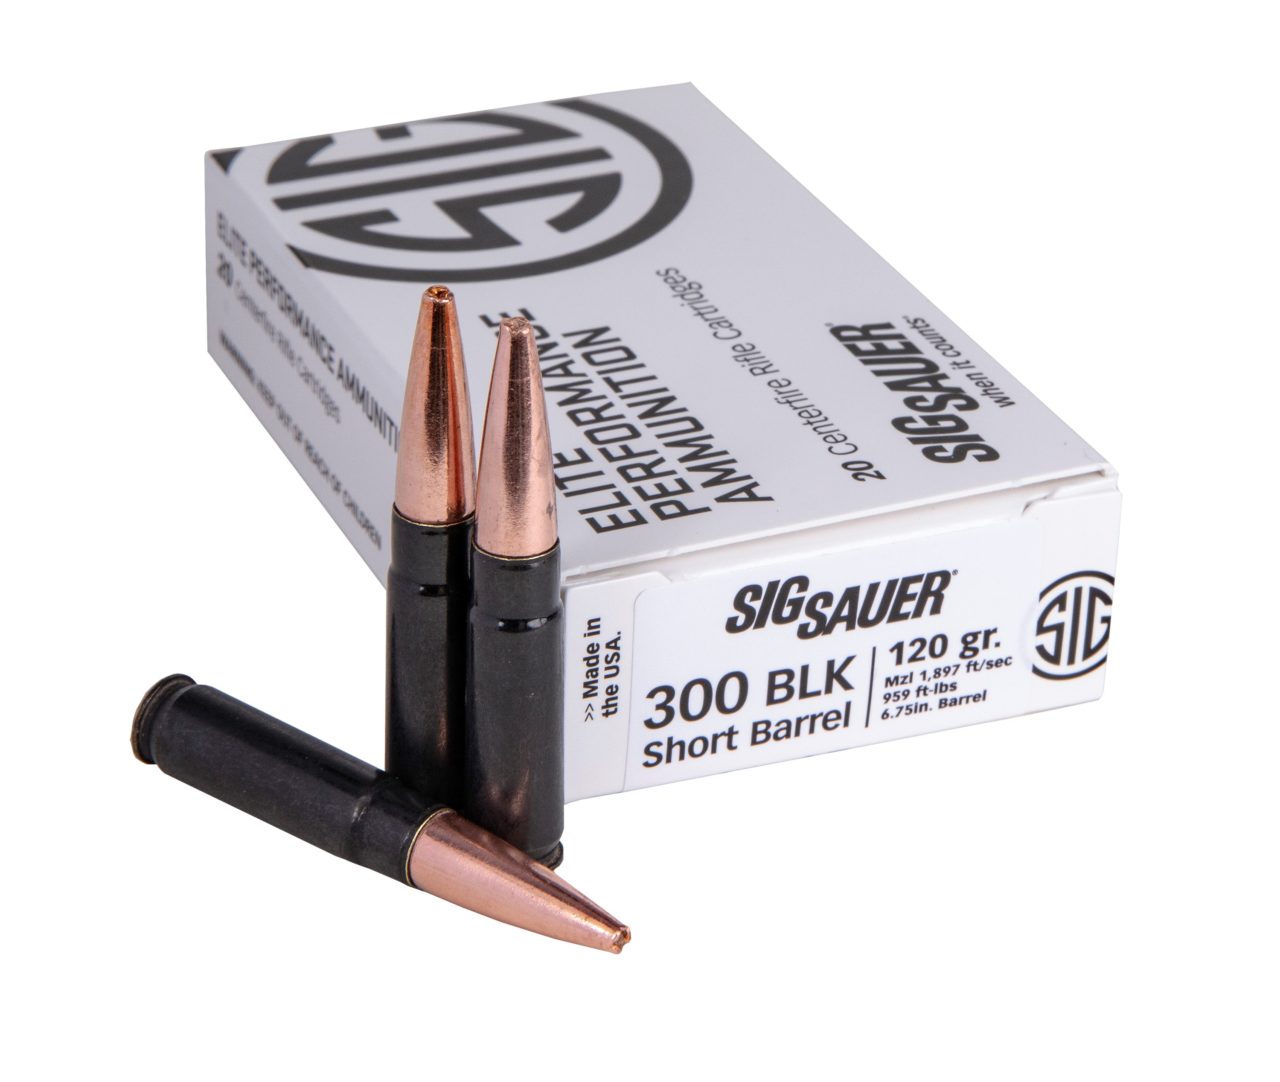 SIG SAUER Introduces 120gr Supersonic 300BLK SBR Elite Copper Duty Ammunition for Short Barrel Rifles